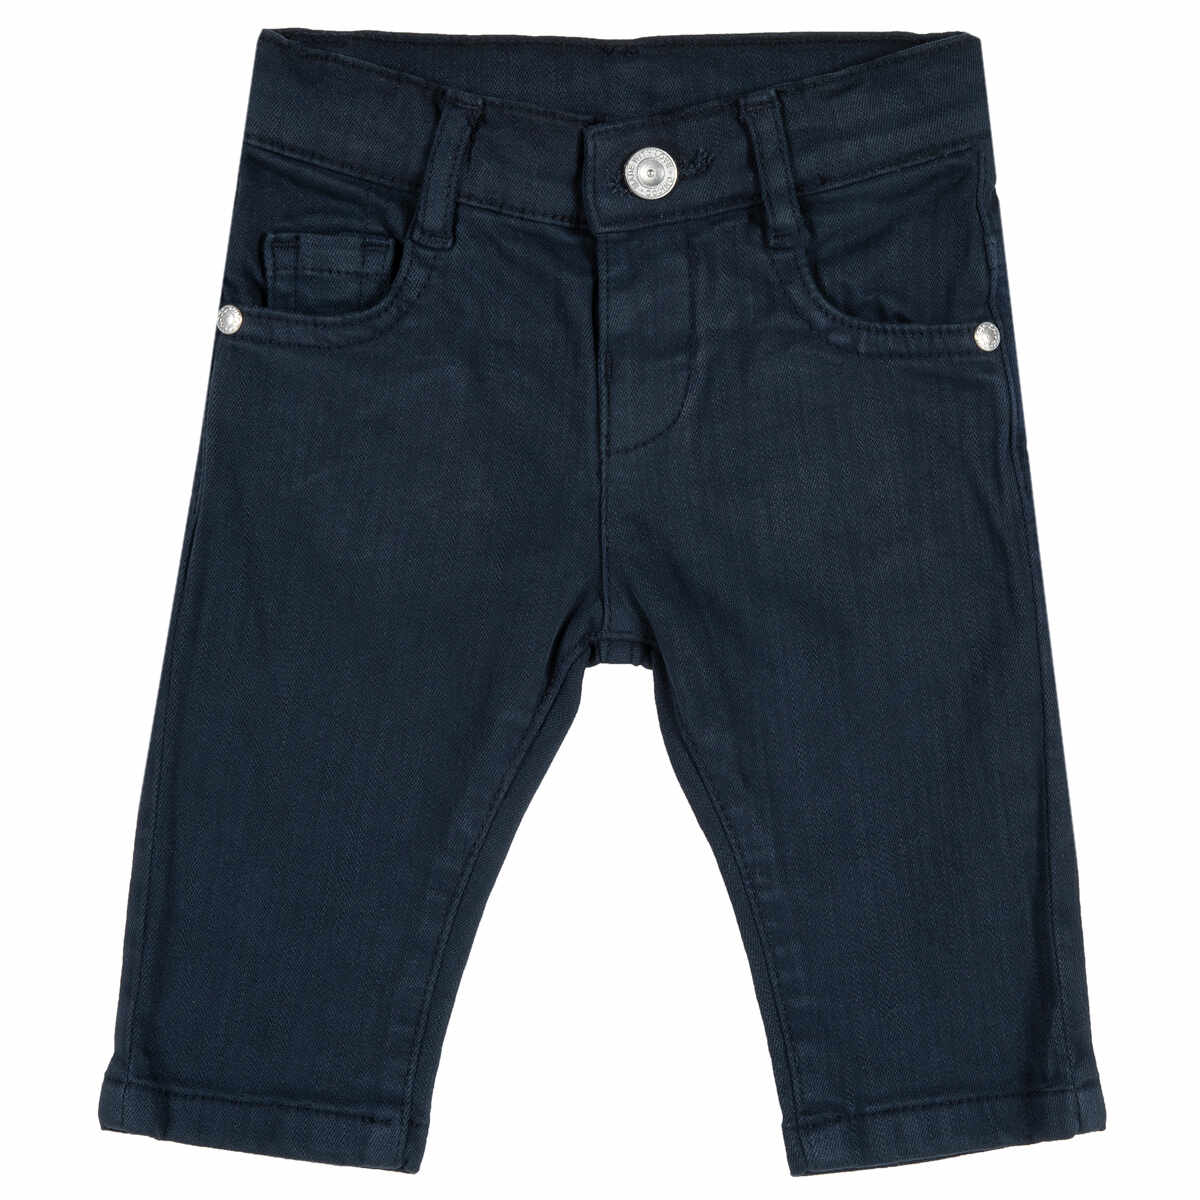 Pantalon lung copii Chicco, regular fit, albastru, 08227